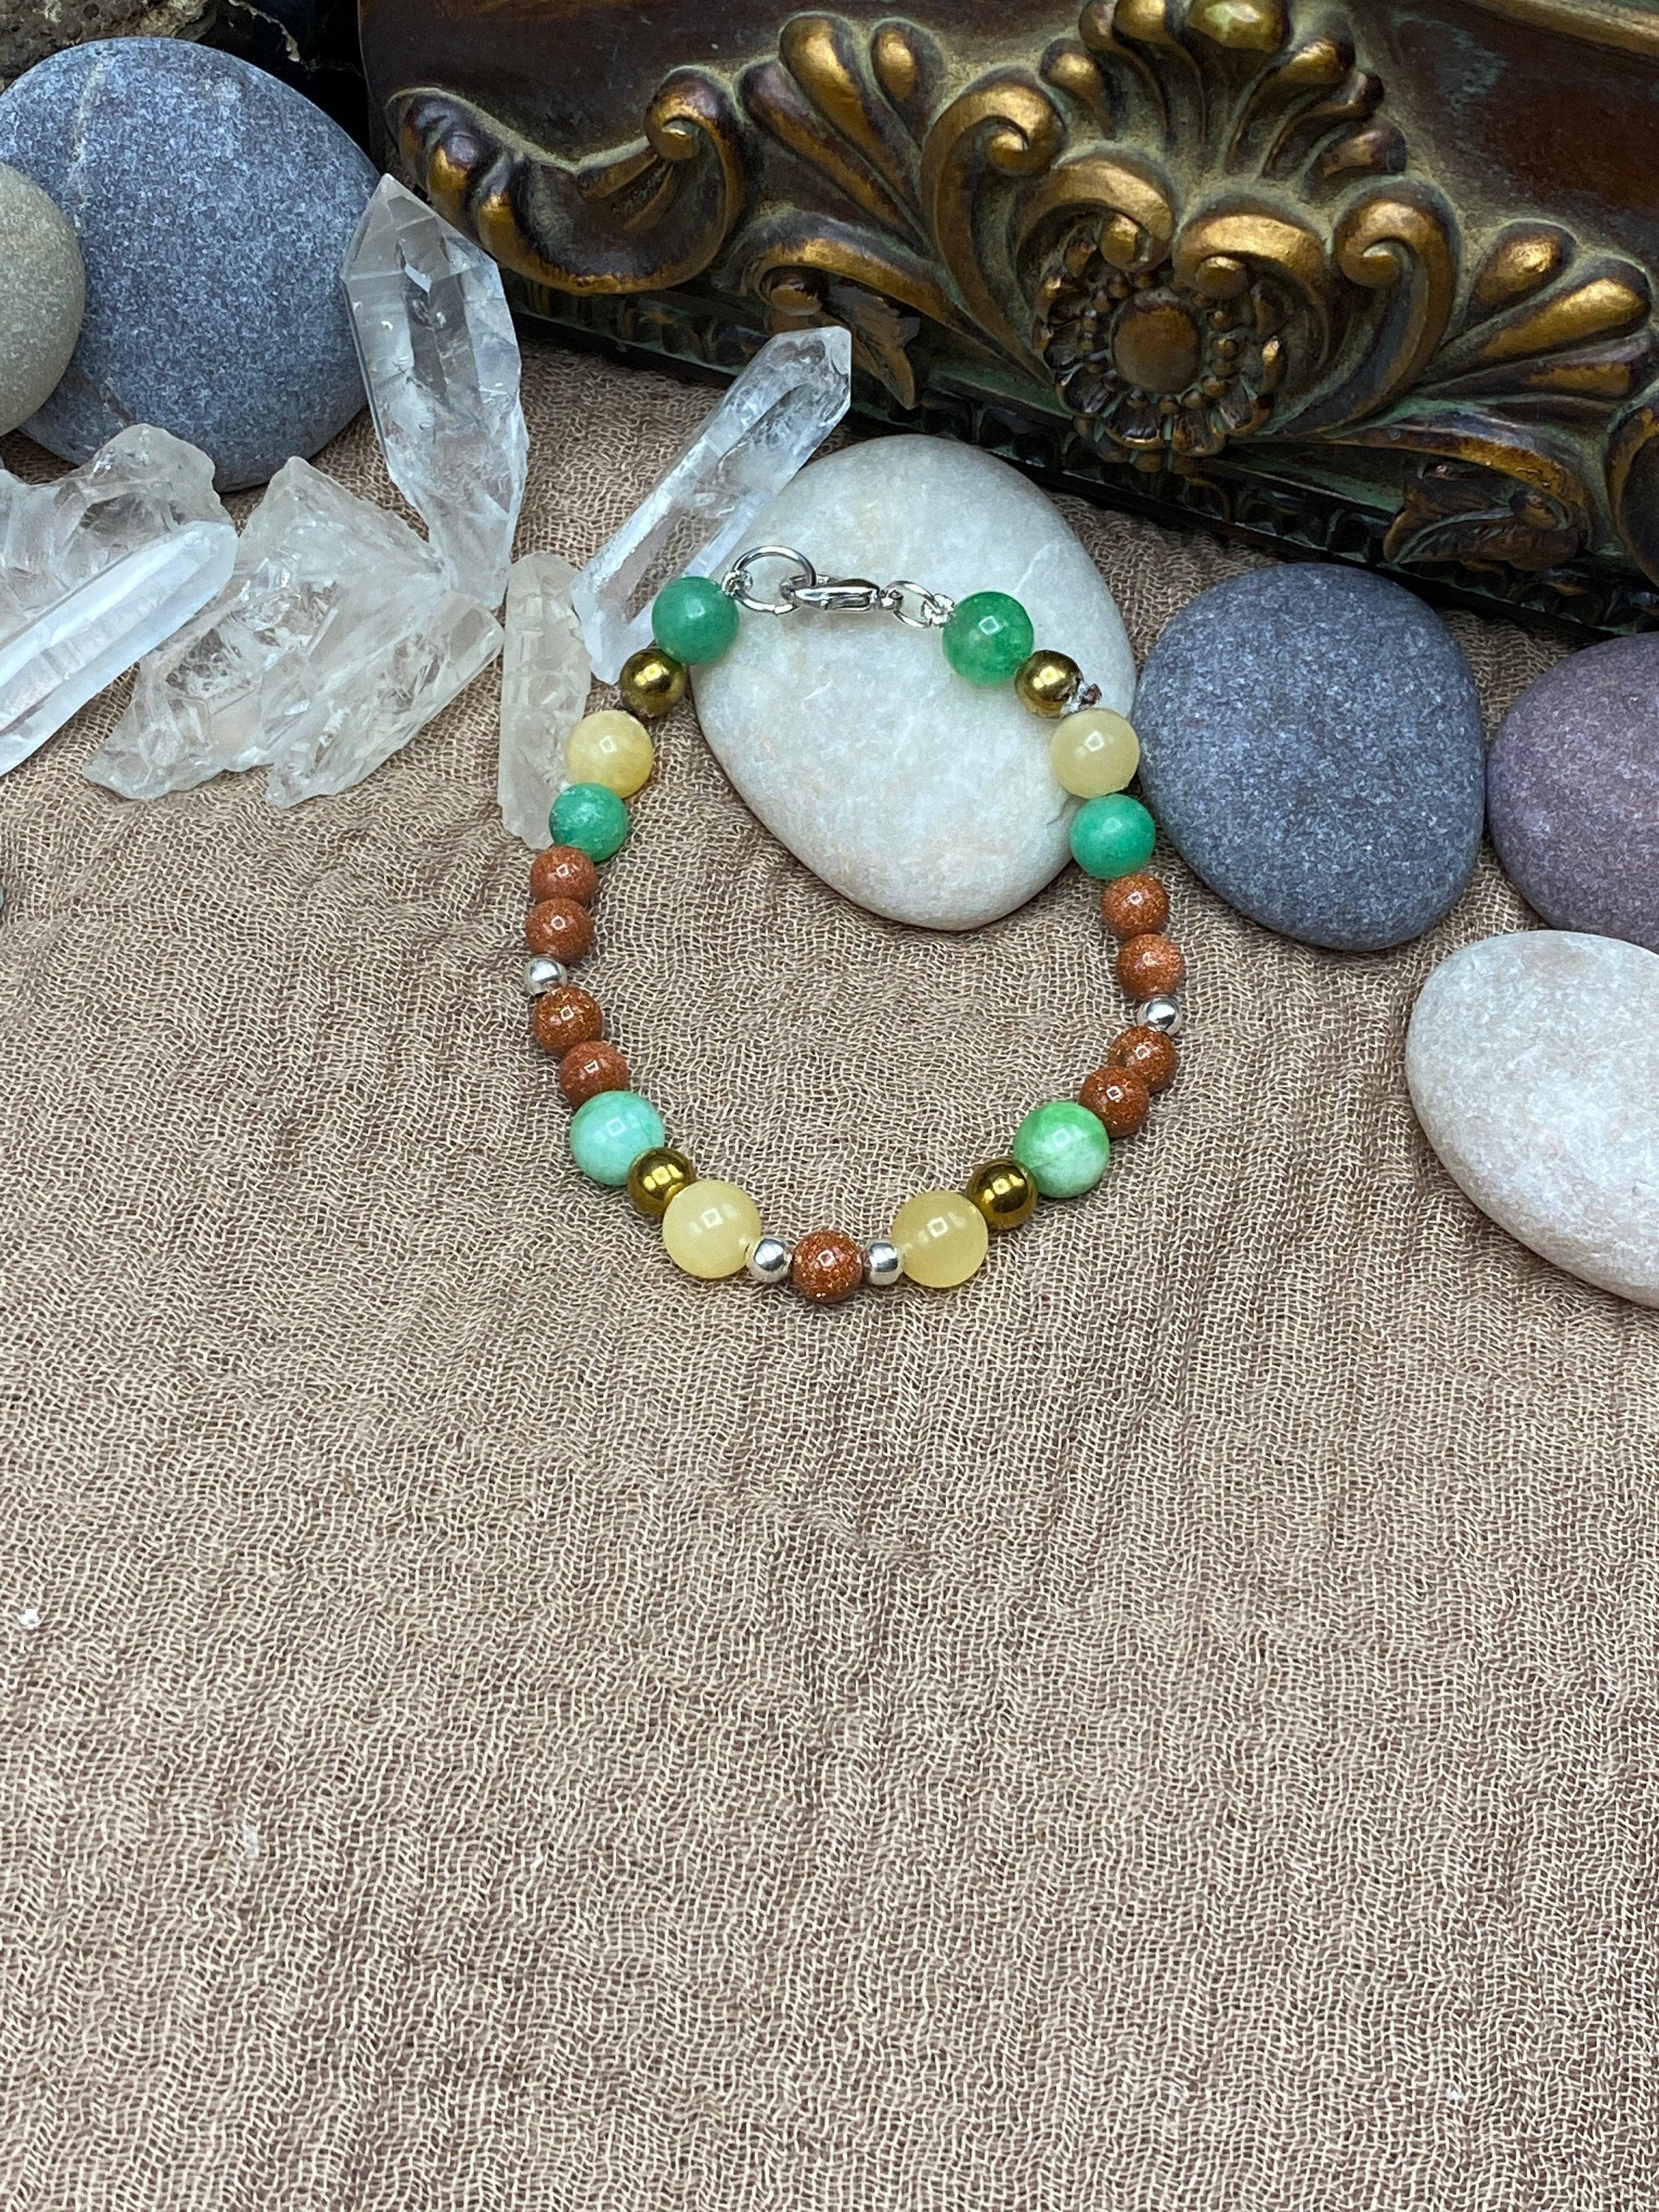 Chakra Healing "Sandflower" Necklace & Bracelet | Goldstone Calcite Green Quartz Picture Jasper | Healing Energy Meditation Yoga Jewelry - Mama’s Malas jewelry